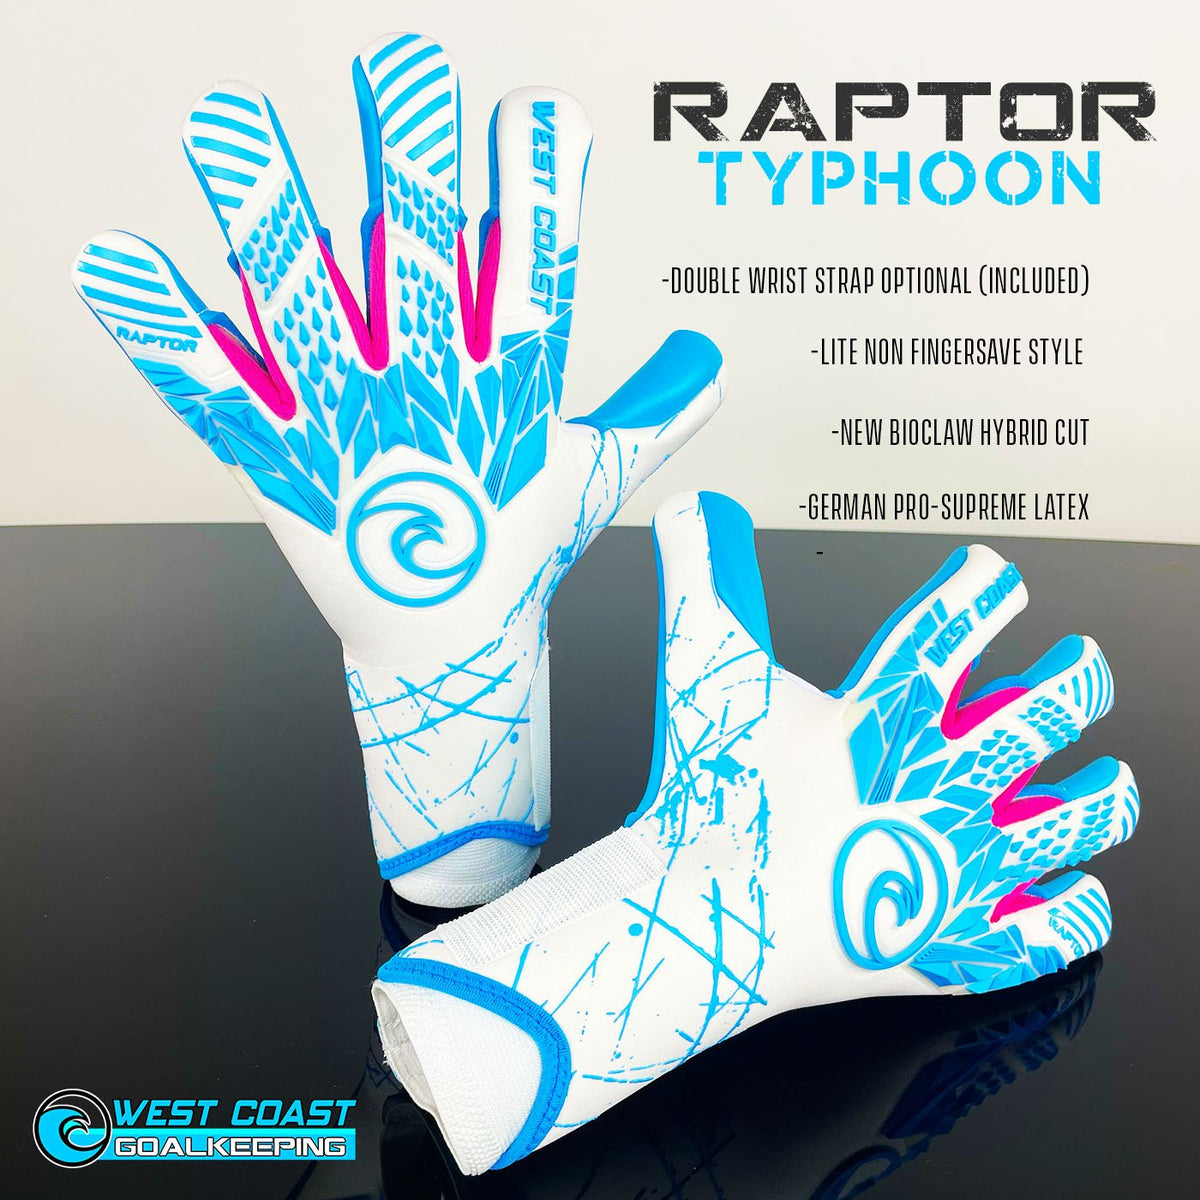 Raptor Typhoon